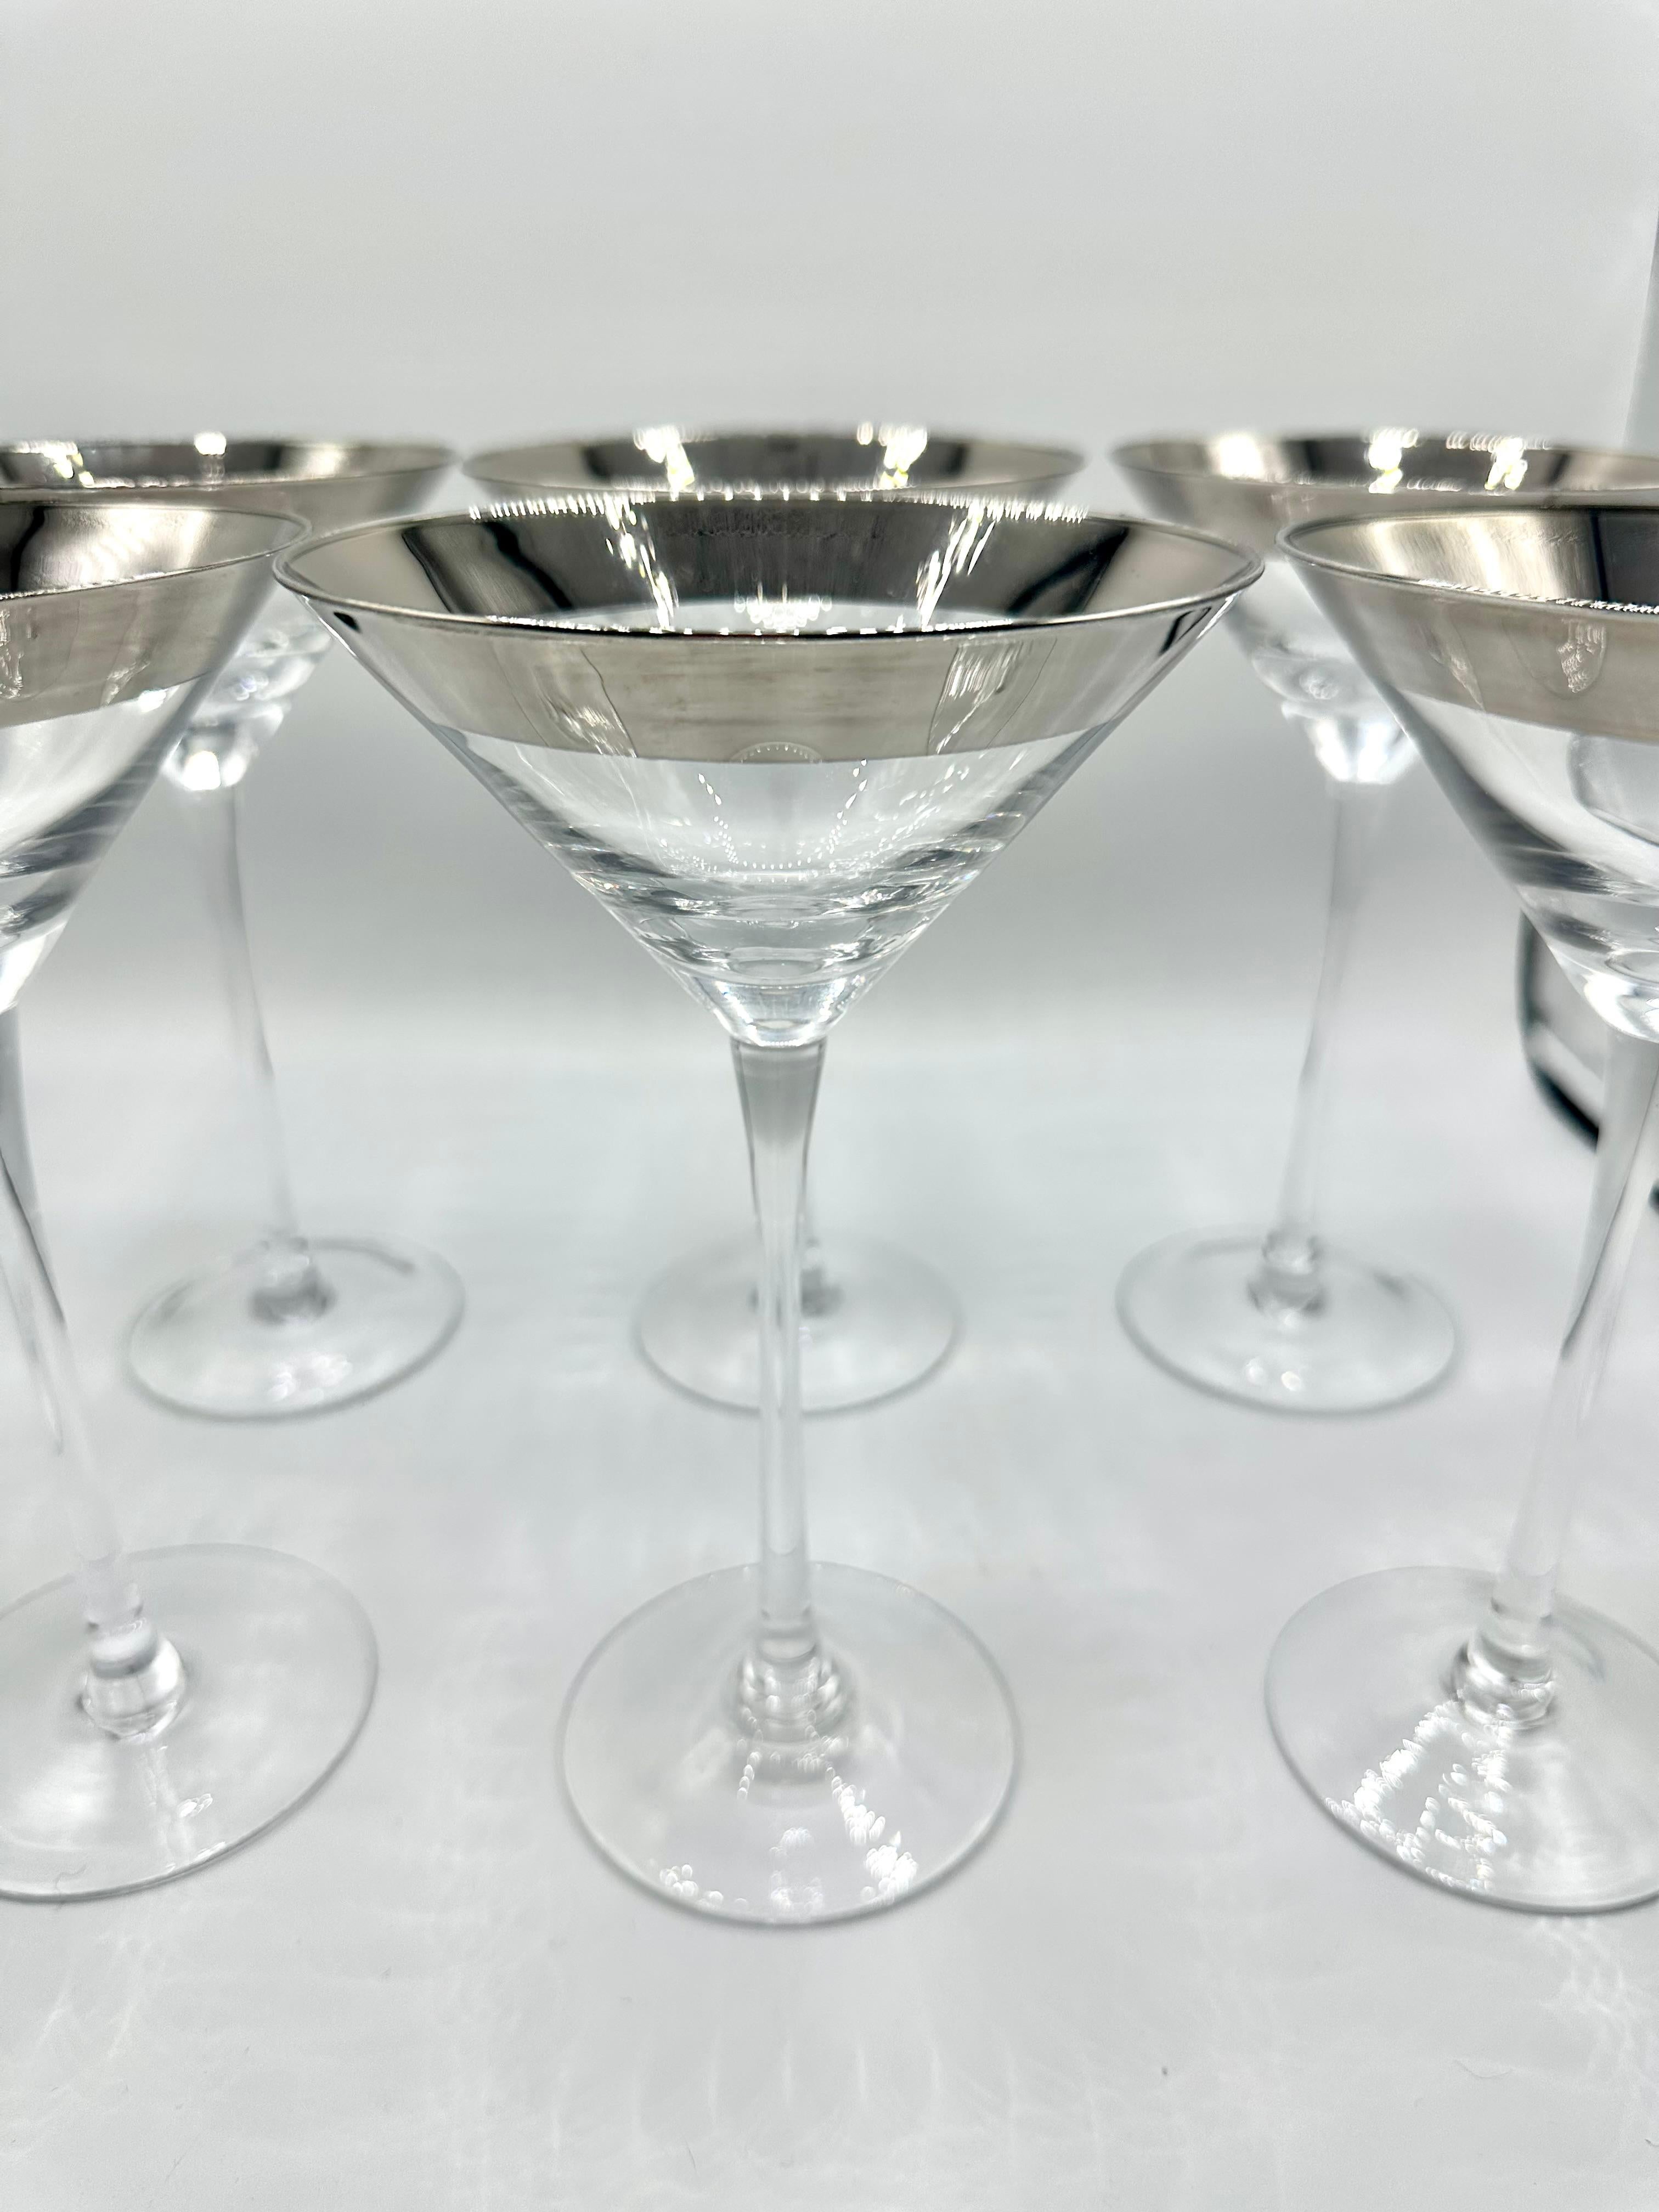 dorothy thorpe martini glasses